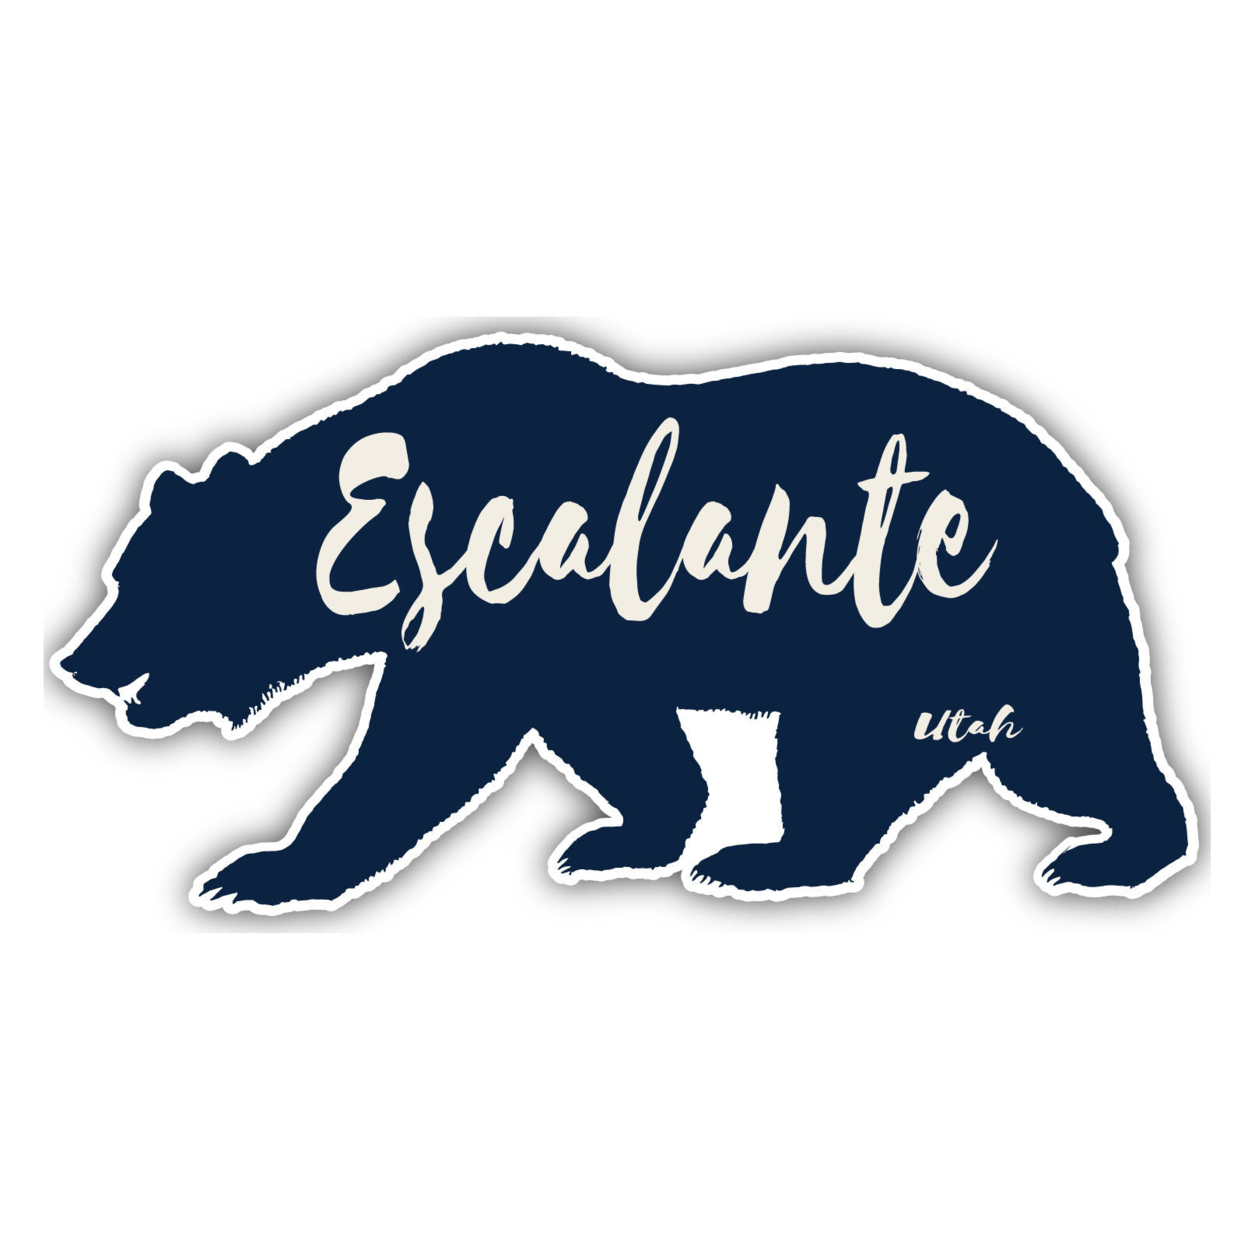 Escalante Utah Souvenir Decorative Stickers (Choose Theme And Size) - Single Unit, 10-Inch, Bear